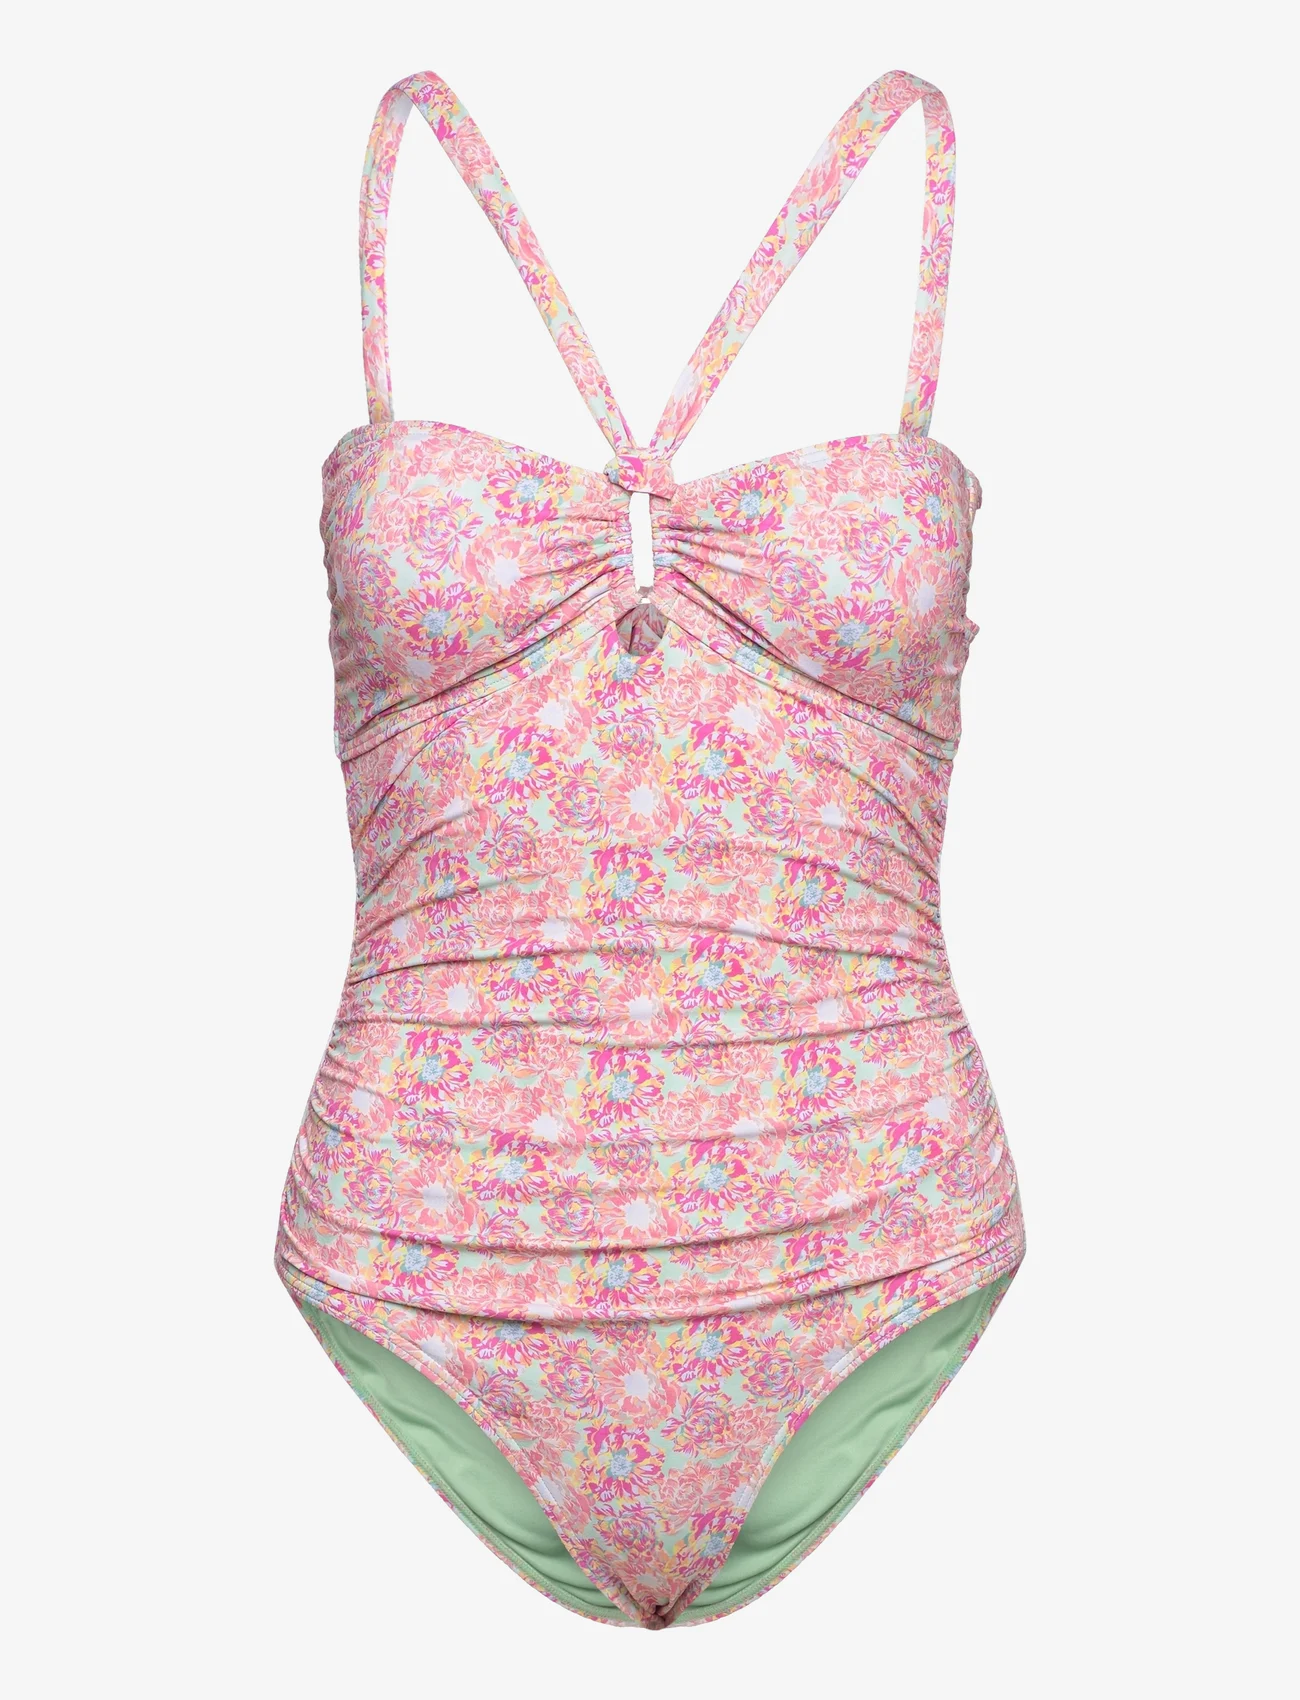 Malina - Eloide swimsuit - badpakken - peony - 0